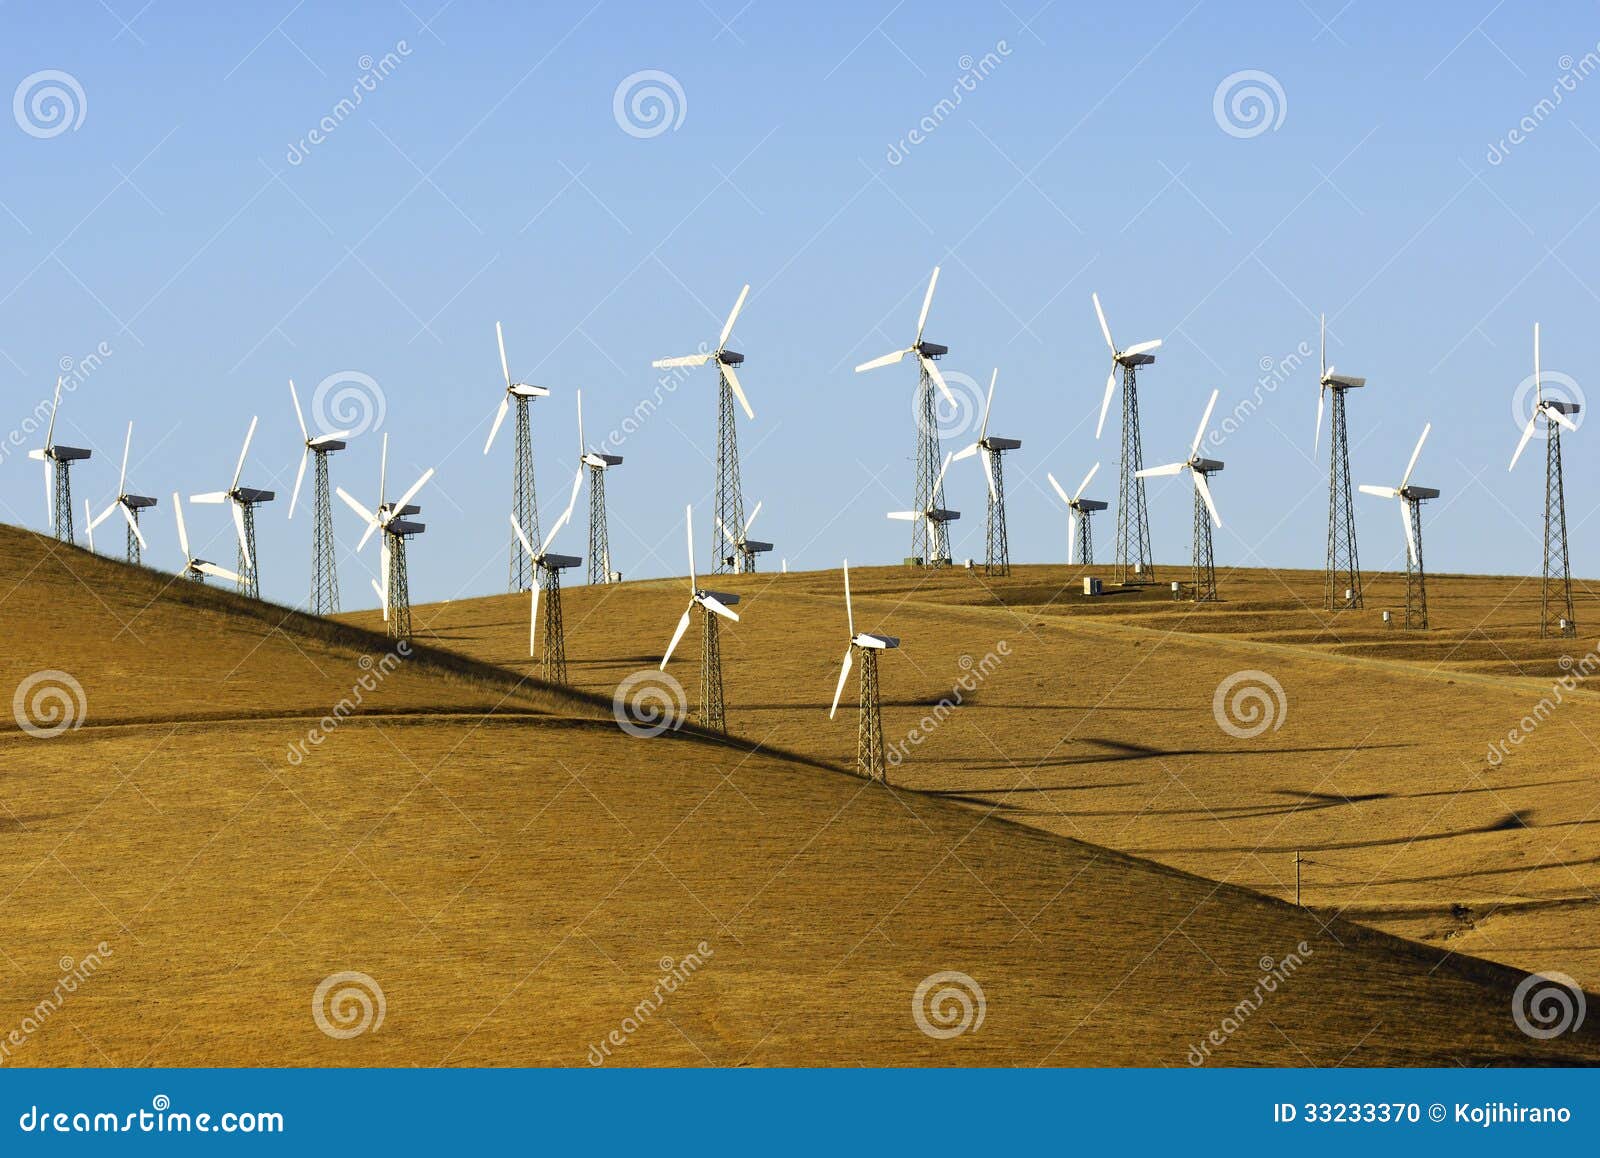 Wind turbines in the golden hills of California.